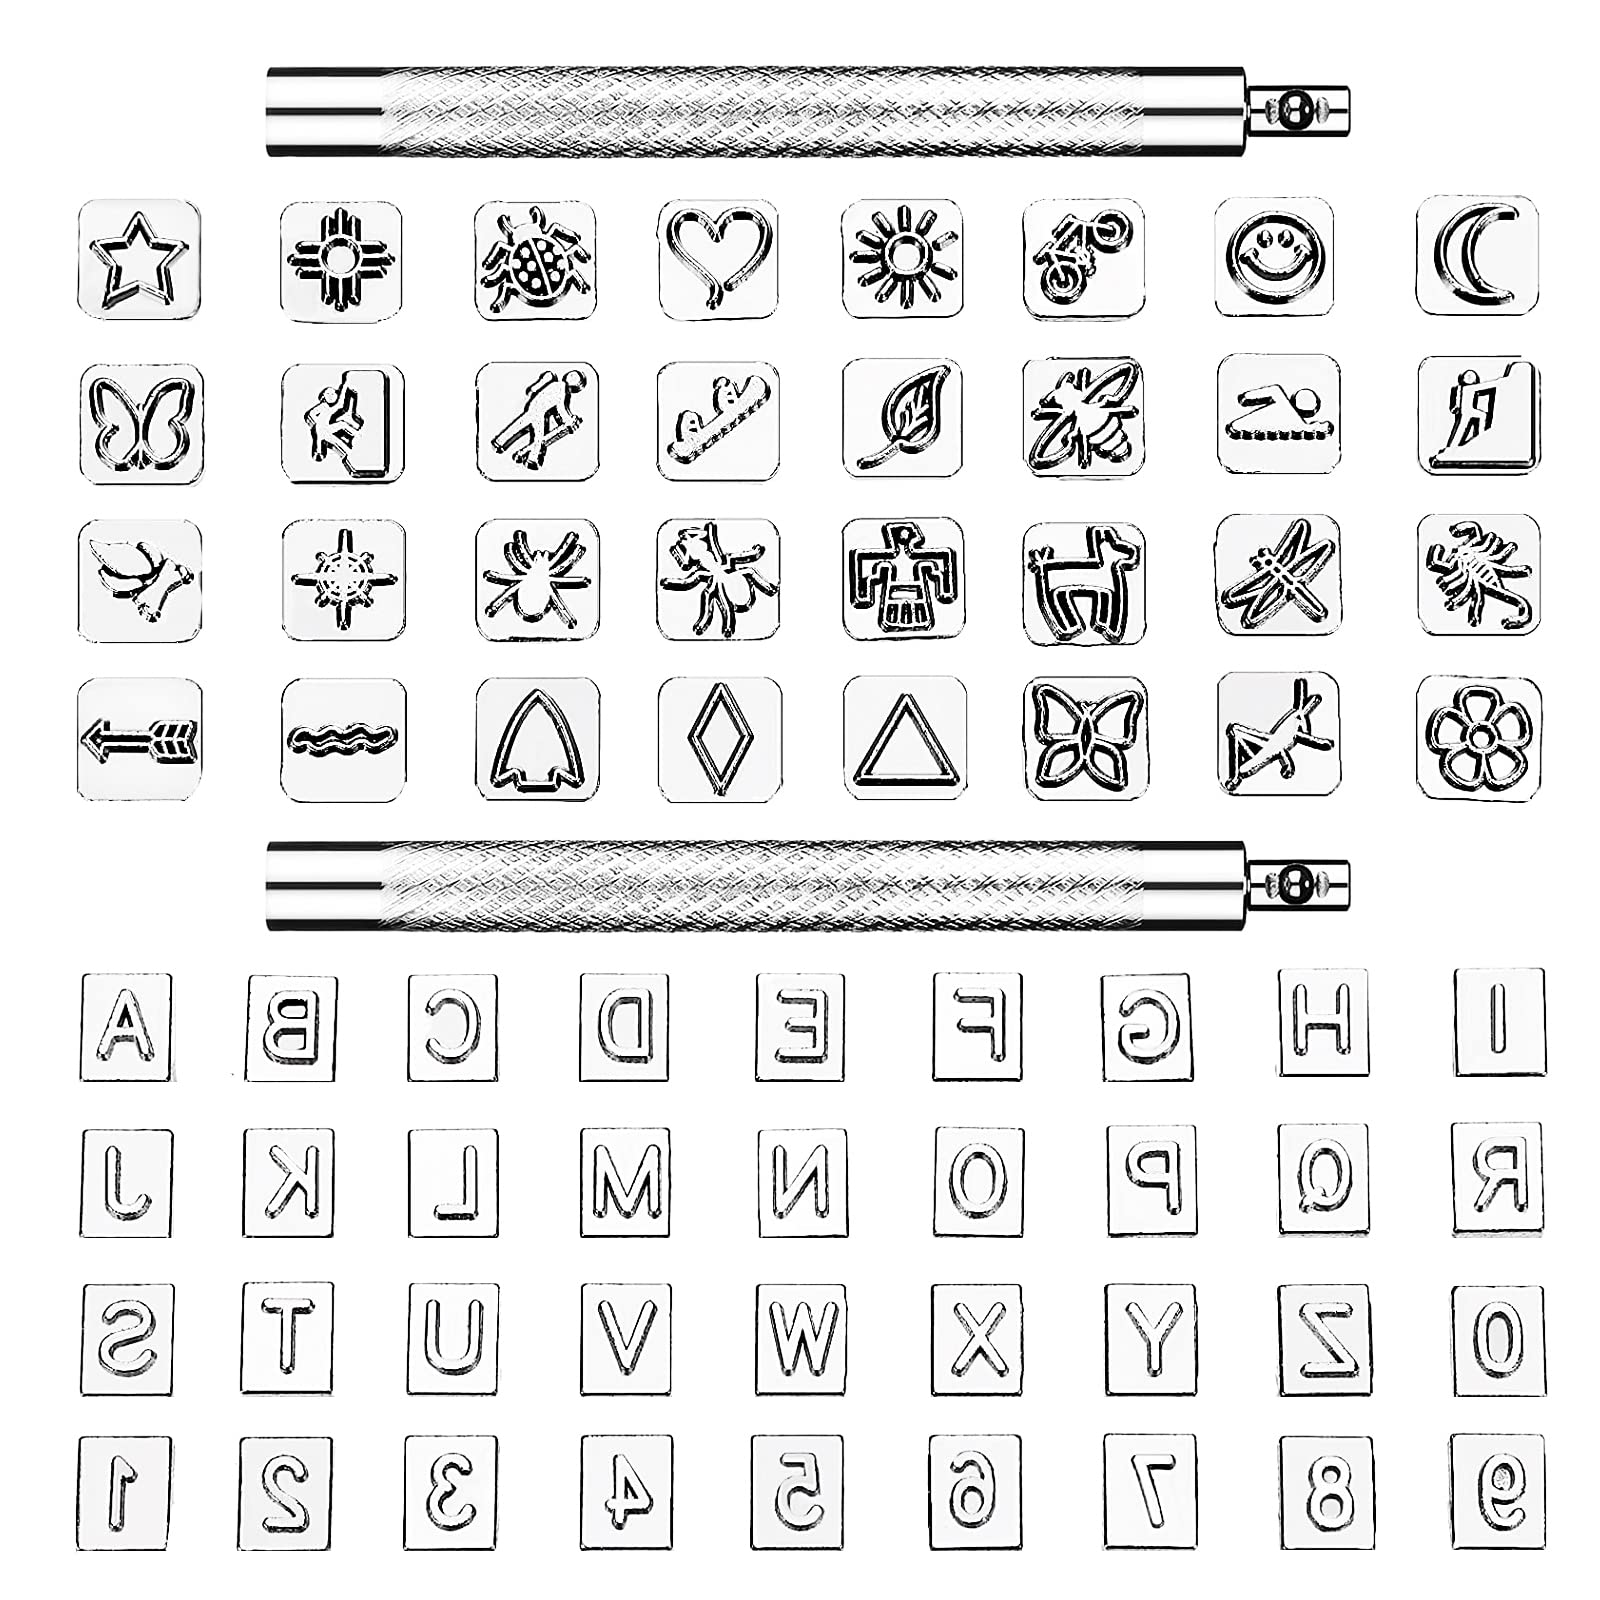 Alphabet Stamping Tool Set, Leather Stamping Alphabet